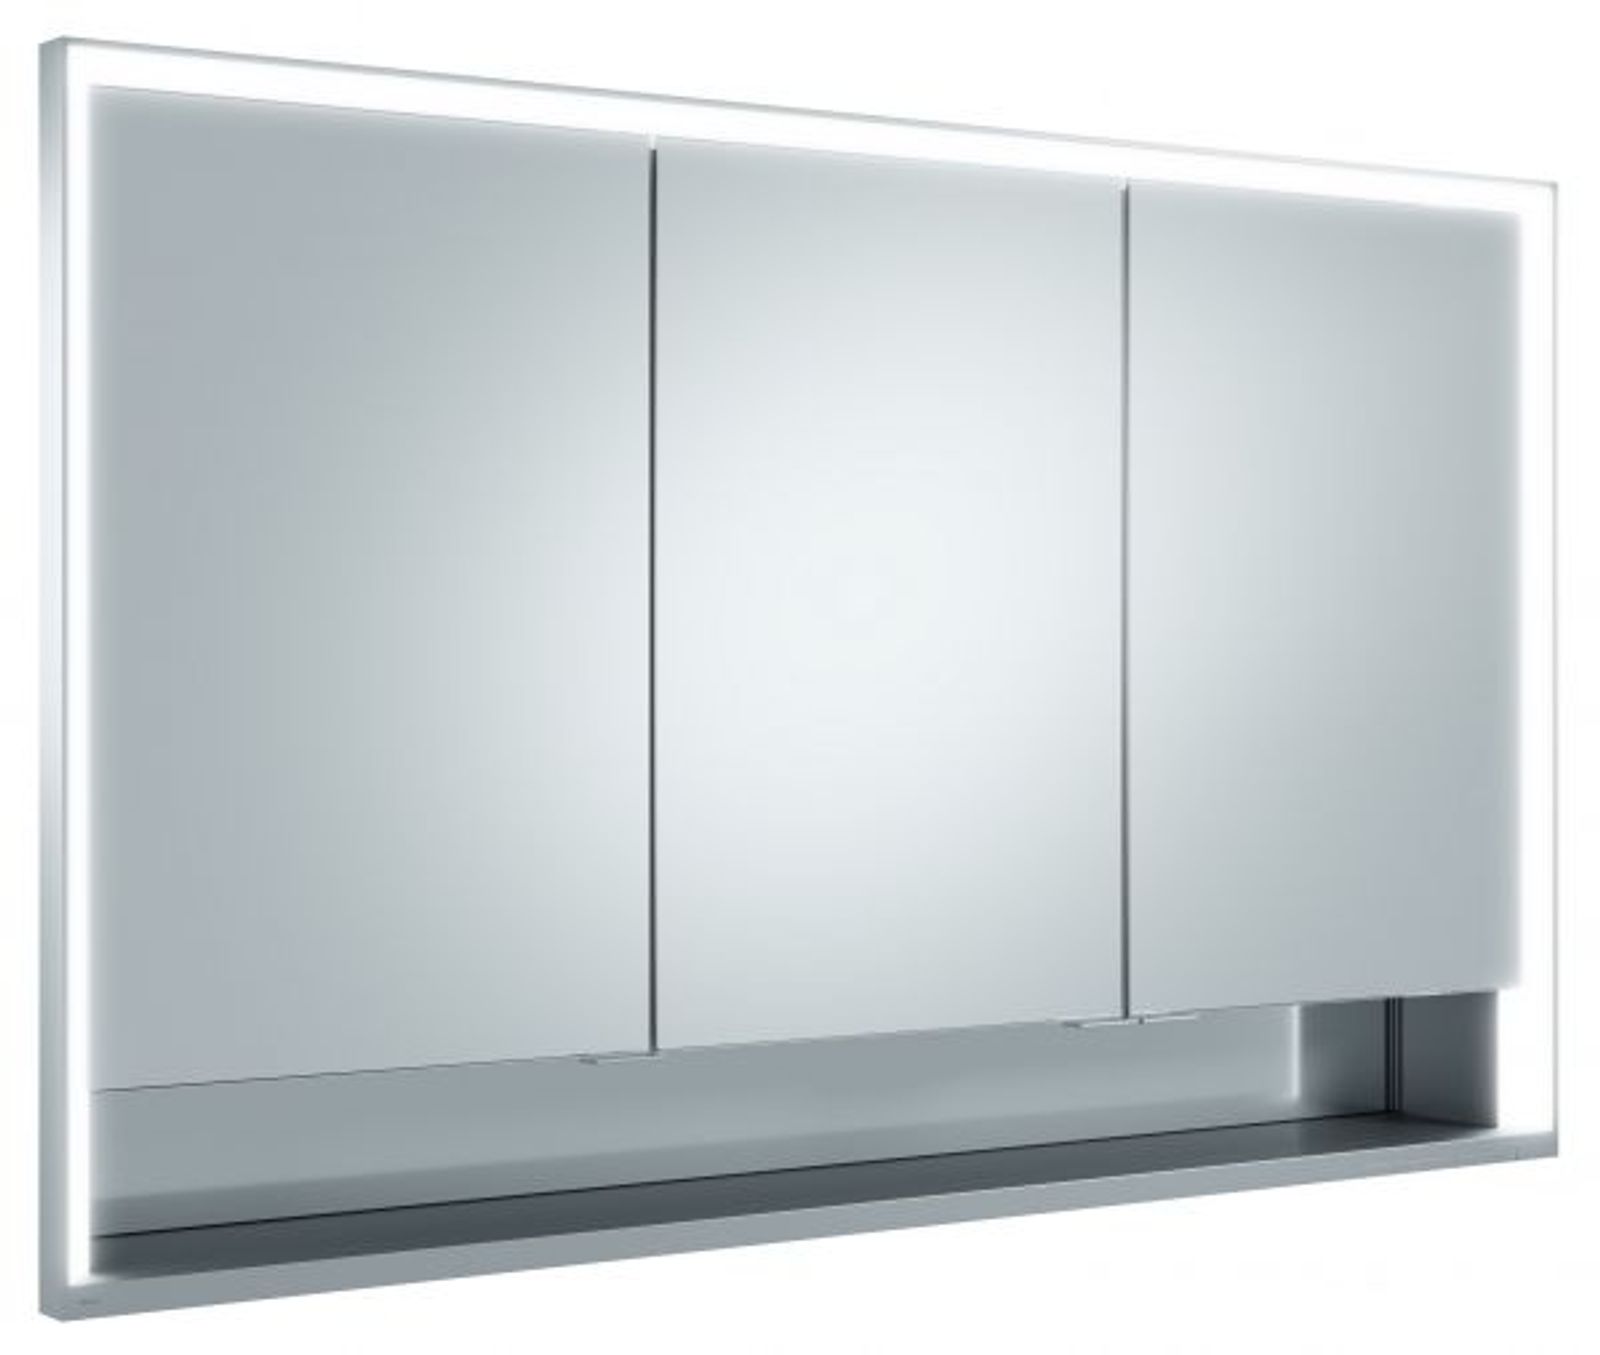 Keuco K-line 300 Einbau-Spiegelschrank 3 B1200xH735xT165mm(35mm v.d. Wand) Silber